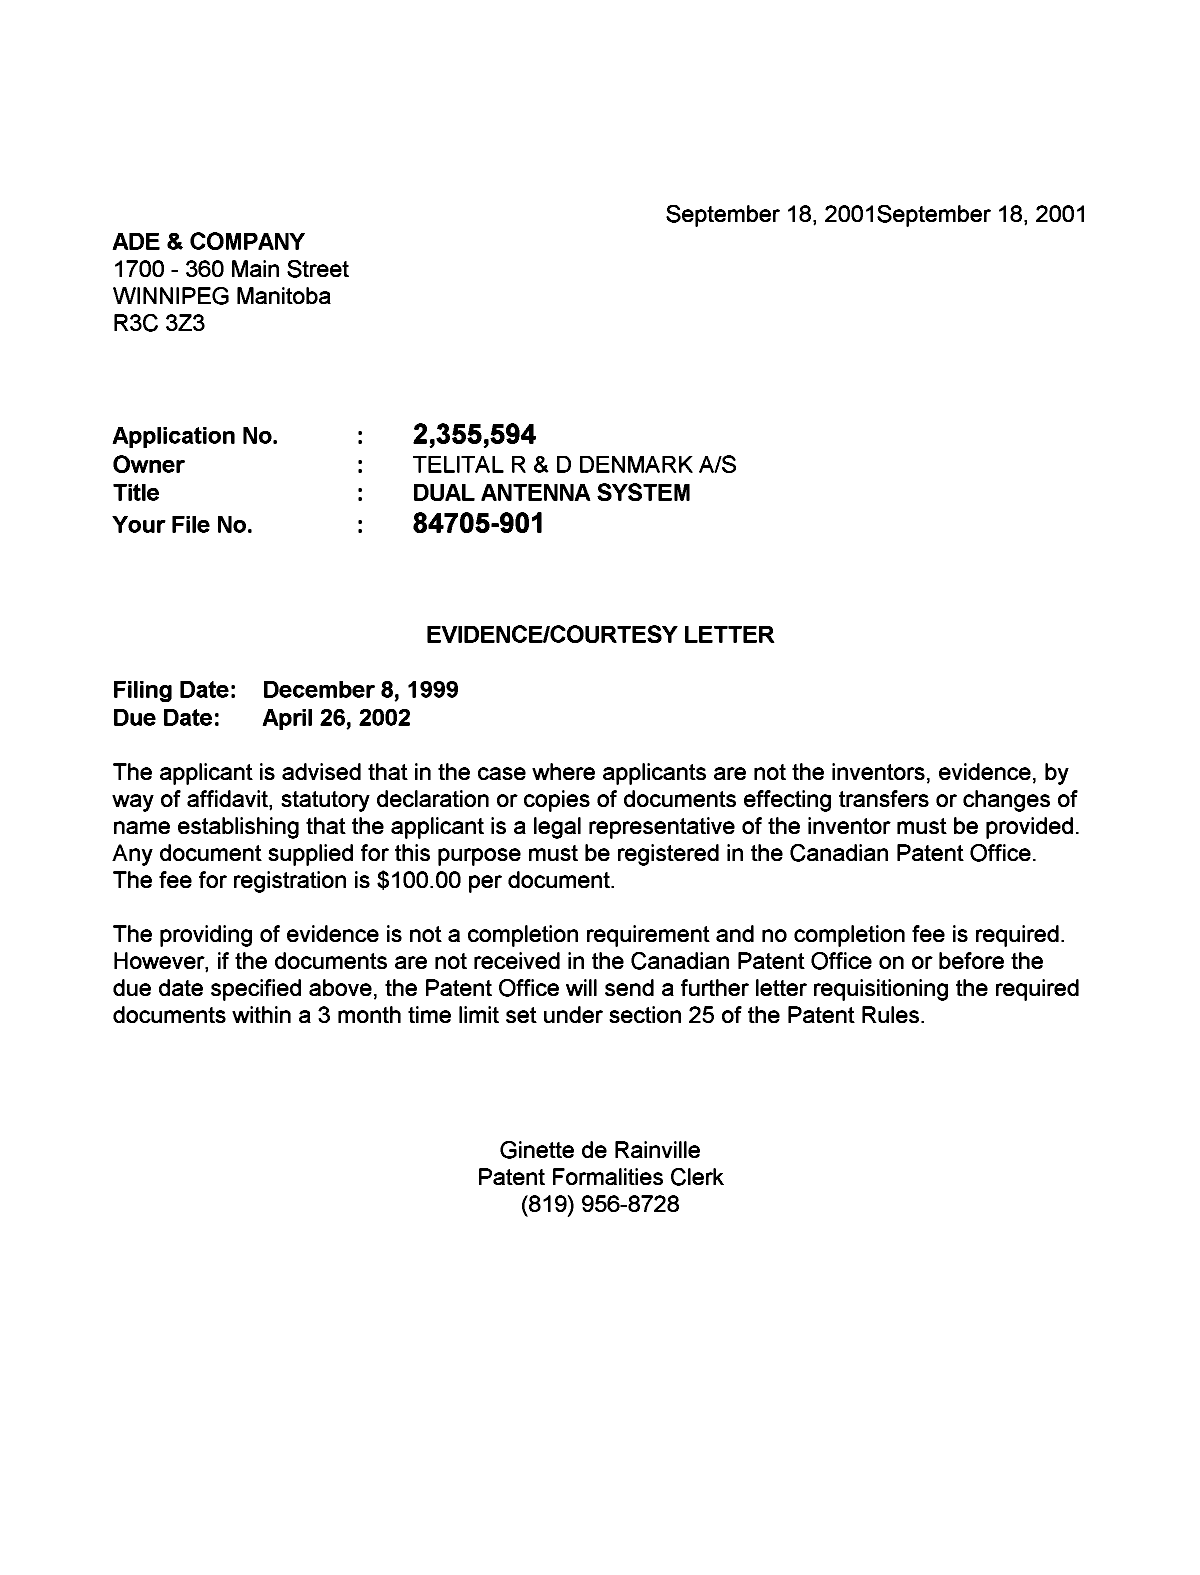 Canadian Patent Document 2355594. Correspondence 20010910. Image 1 of 1